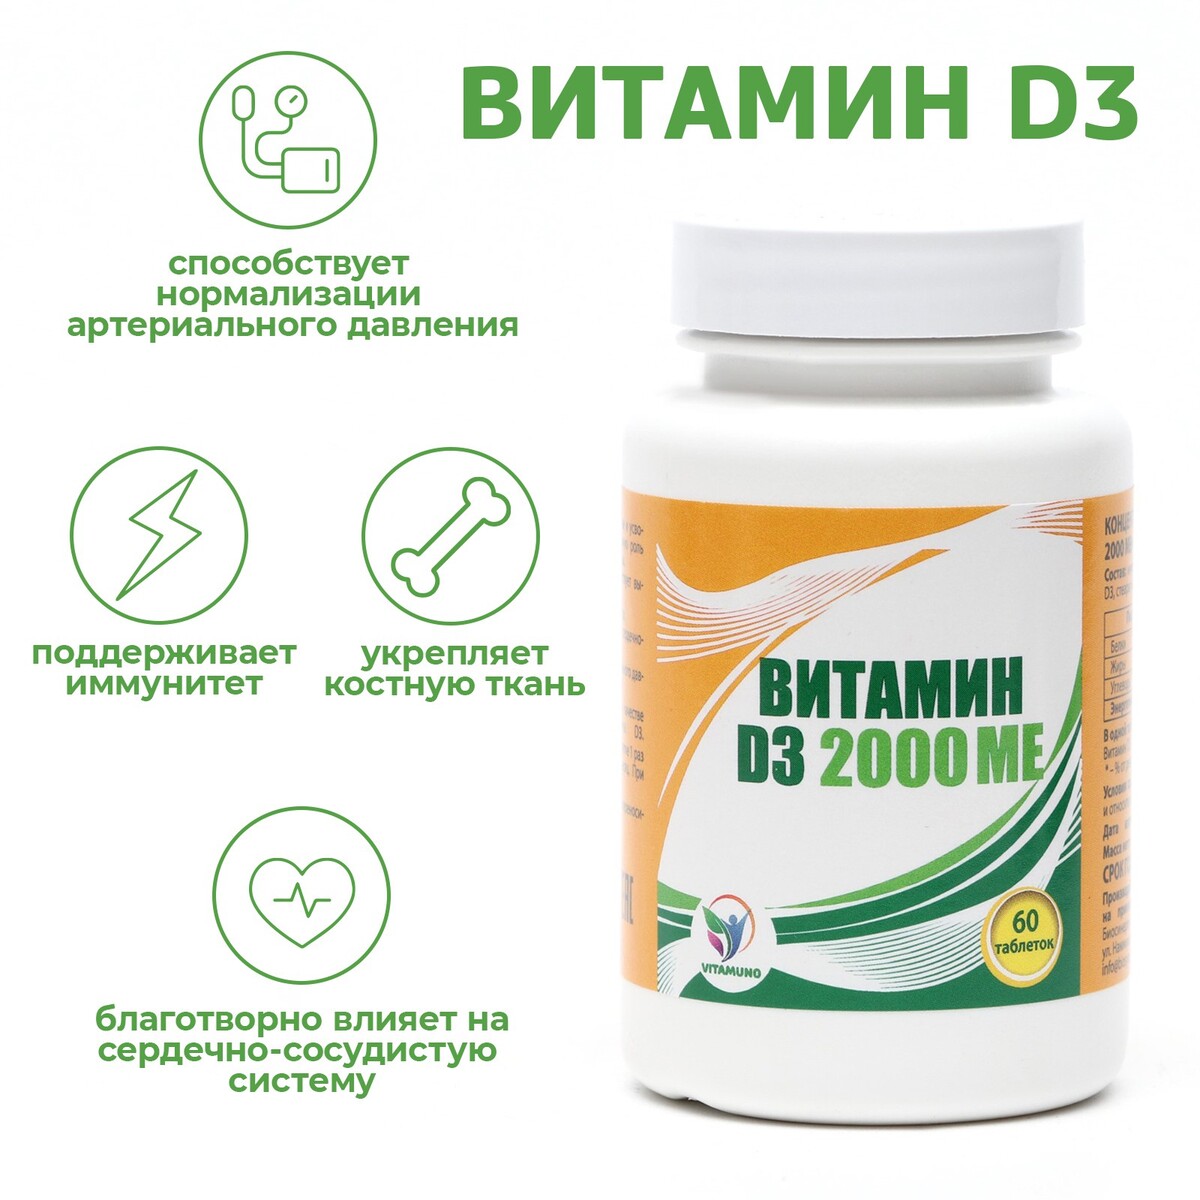 Витамин d3 2000 me vitamuno, 60 таблеток Vitamuno